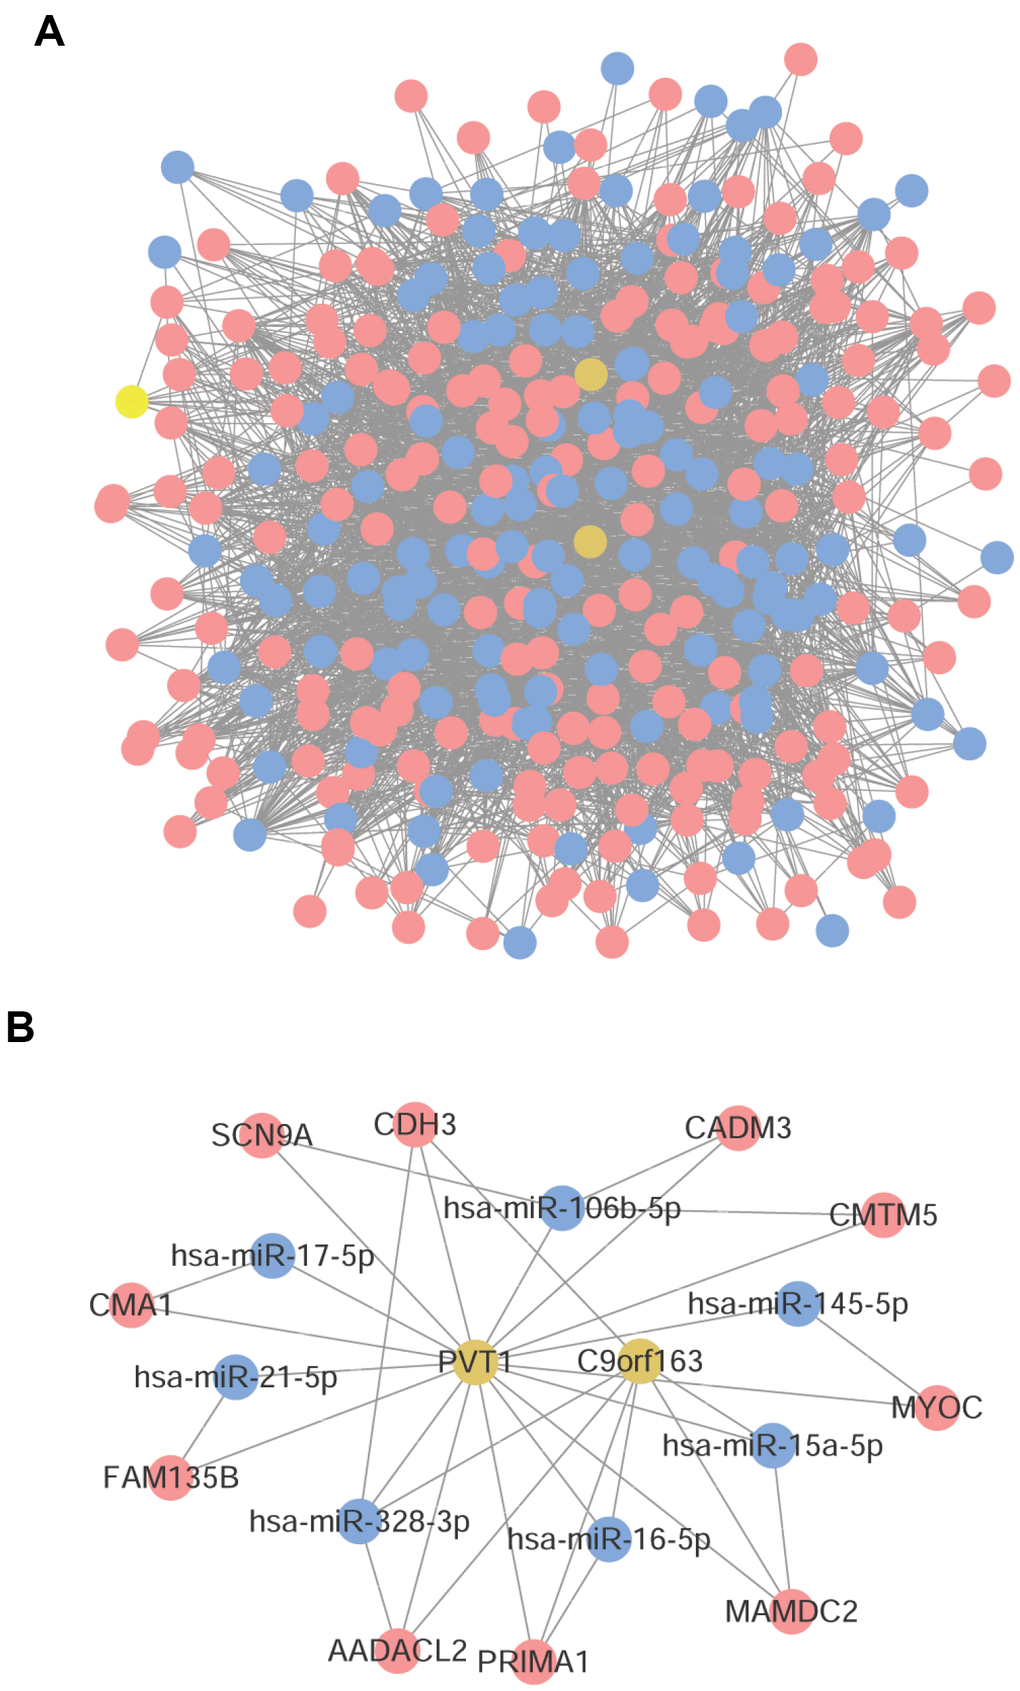 Construction of ceRNA network. (A) The ceRNA network constructed by 197 mRNAs, 135 miRNAs, and 3 lncRNAs. (B) The ceRNA network constructed by 7 miRNAs, 2 lncRNAs, and 10 mRNAs. Red node was mRNA, yellow node was lncRNA, and blue node was miRNA.